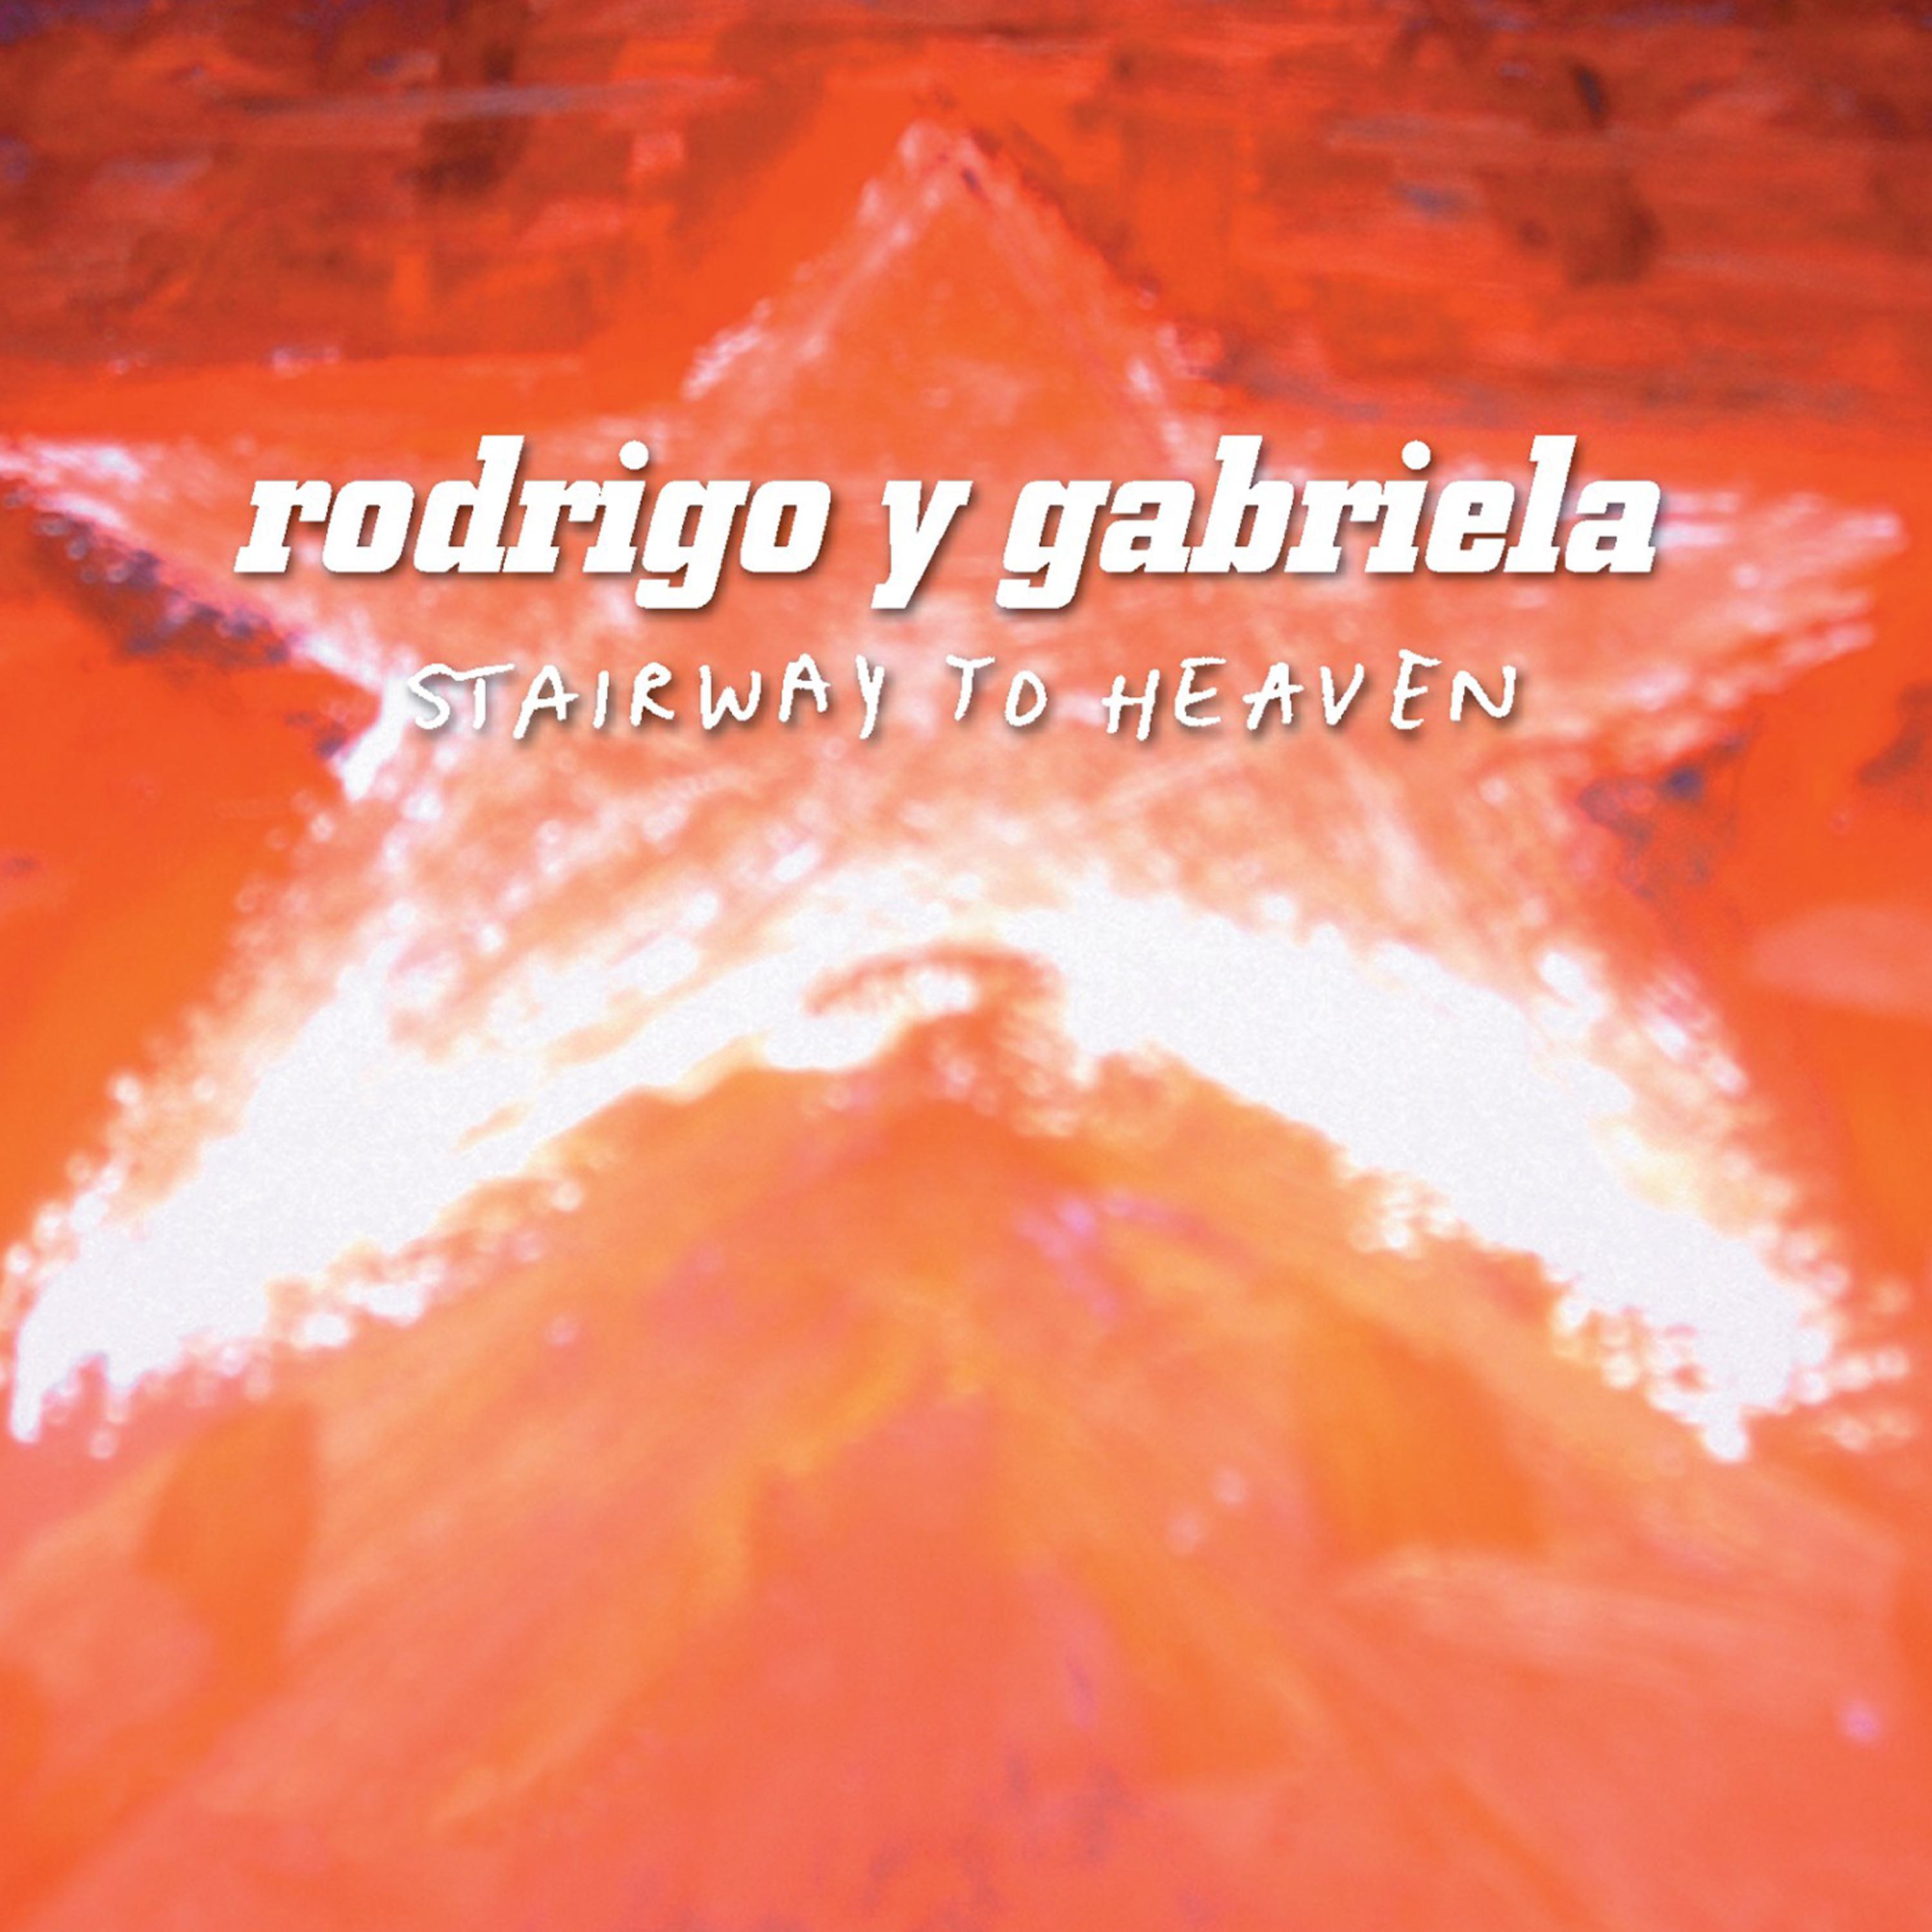 Rodrigo y Gabriela - Stairway to Heaven